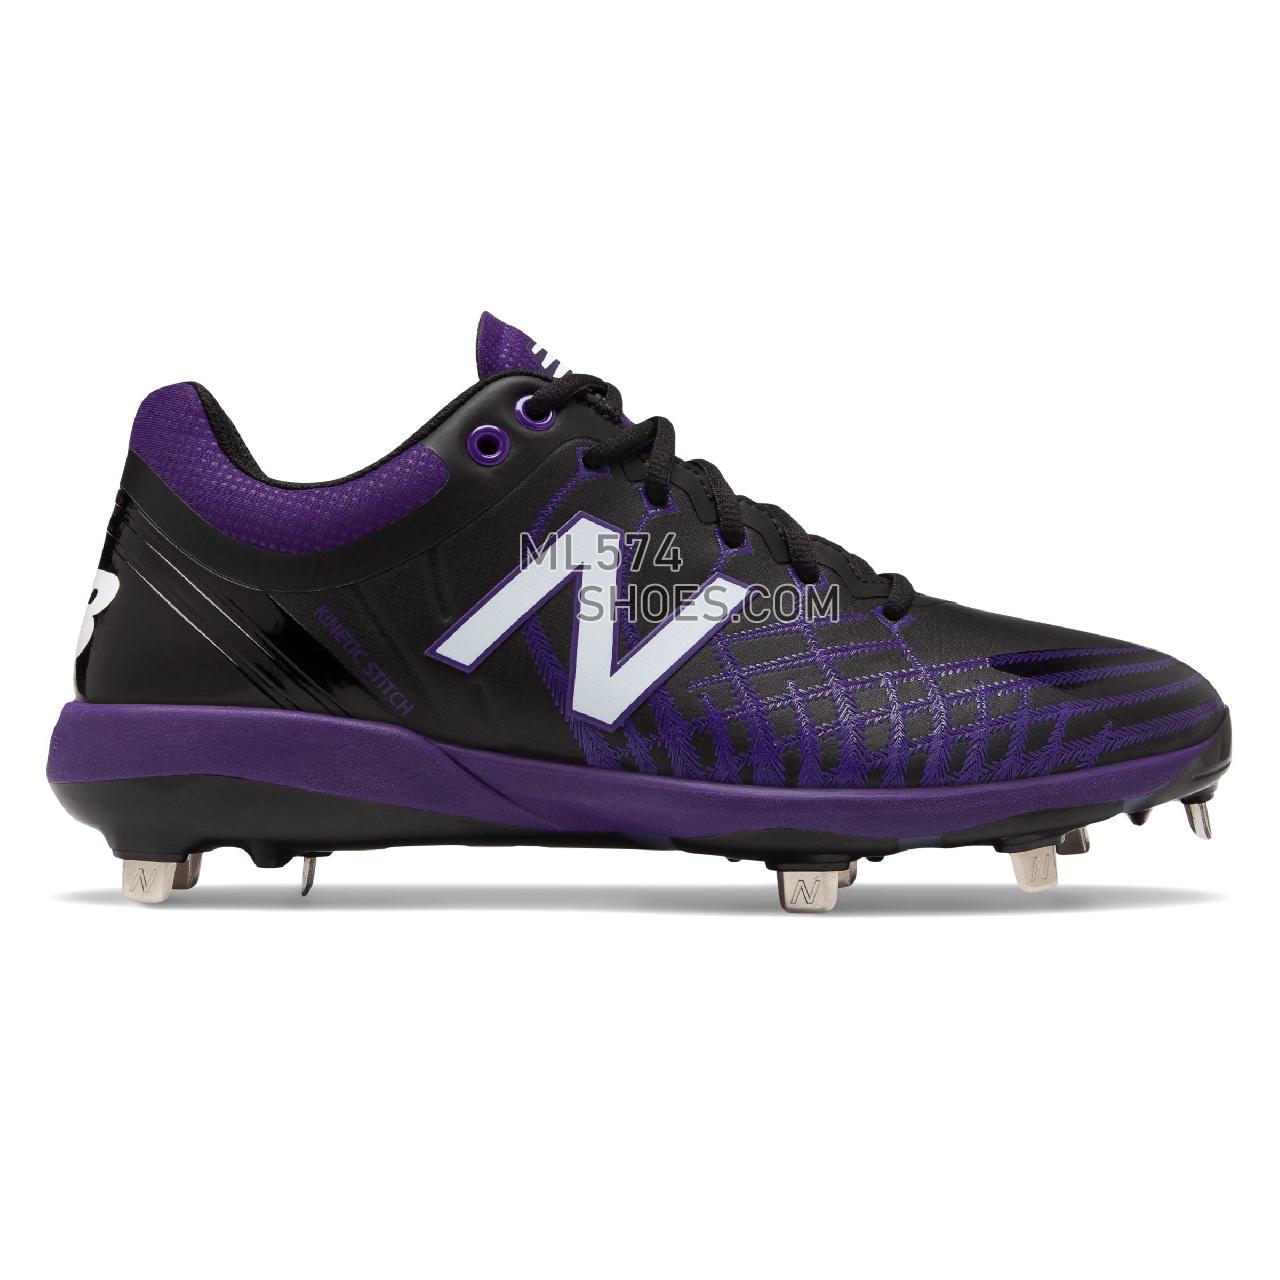 New Balance 4040v5 Metal - Men's Baseball Turf - Black with Purple - L4040BP5